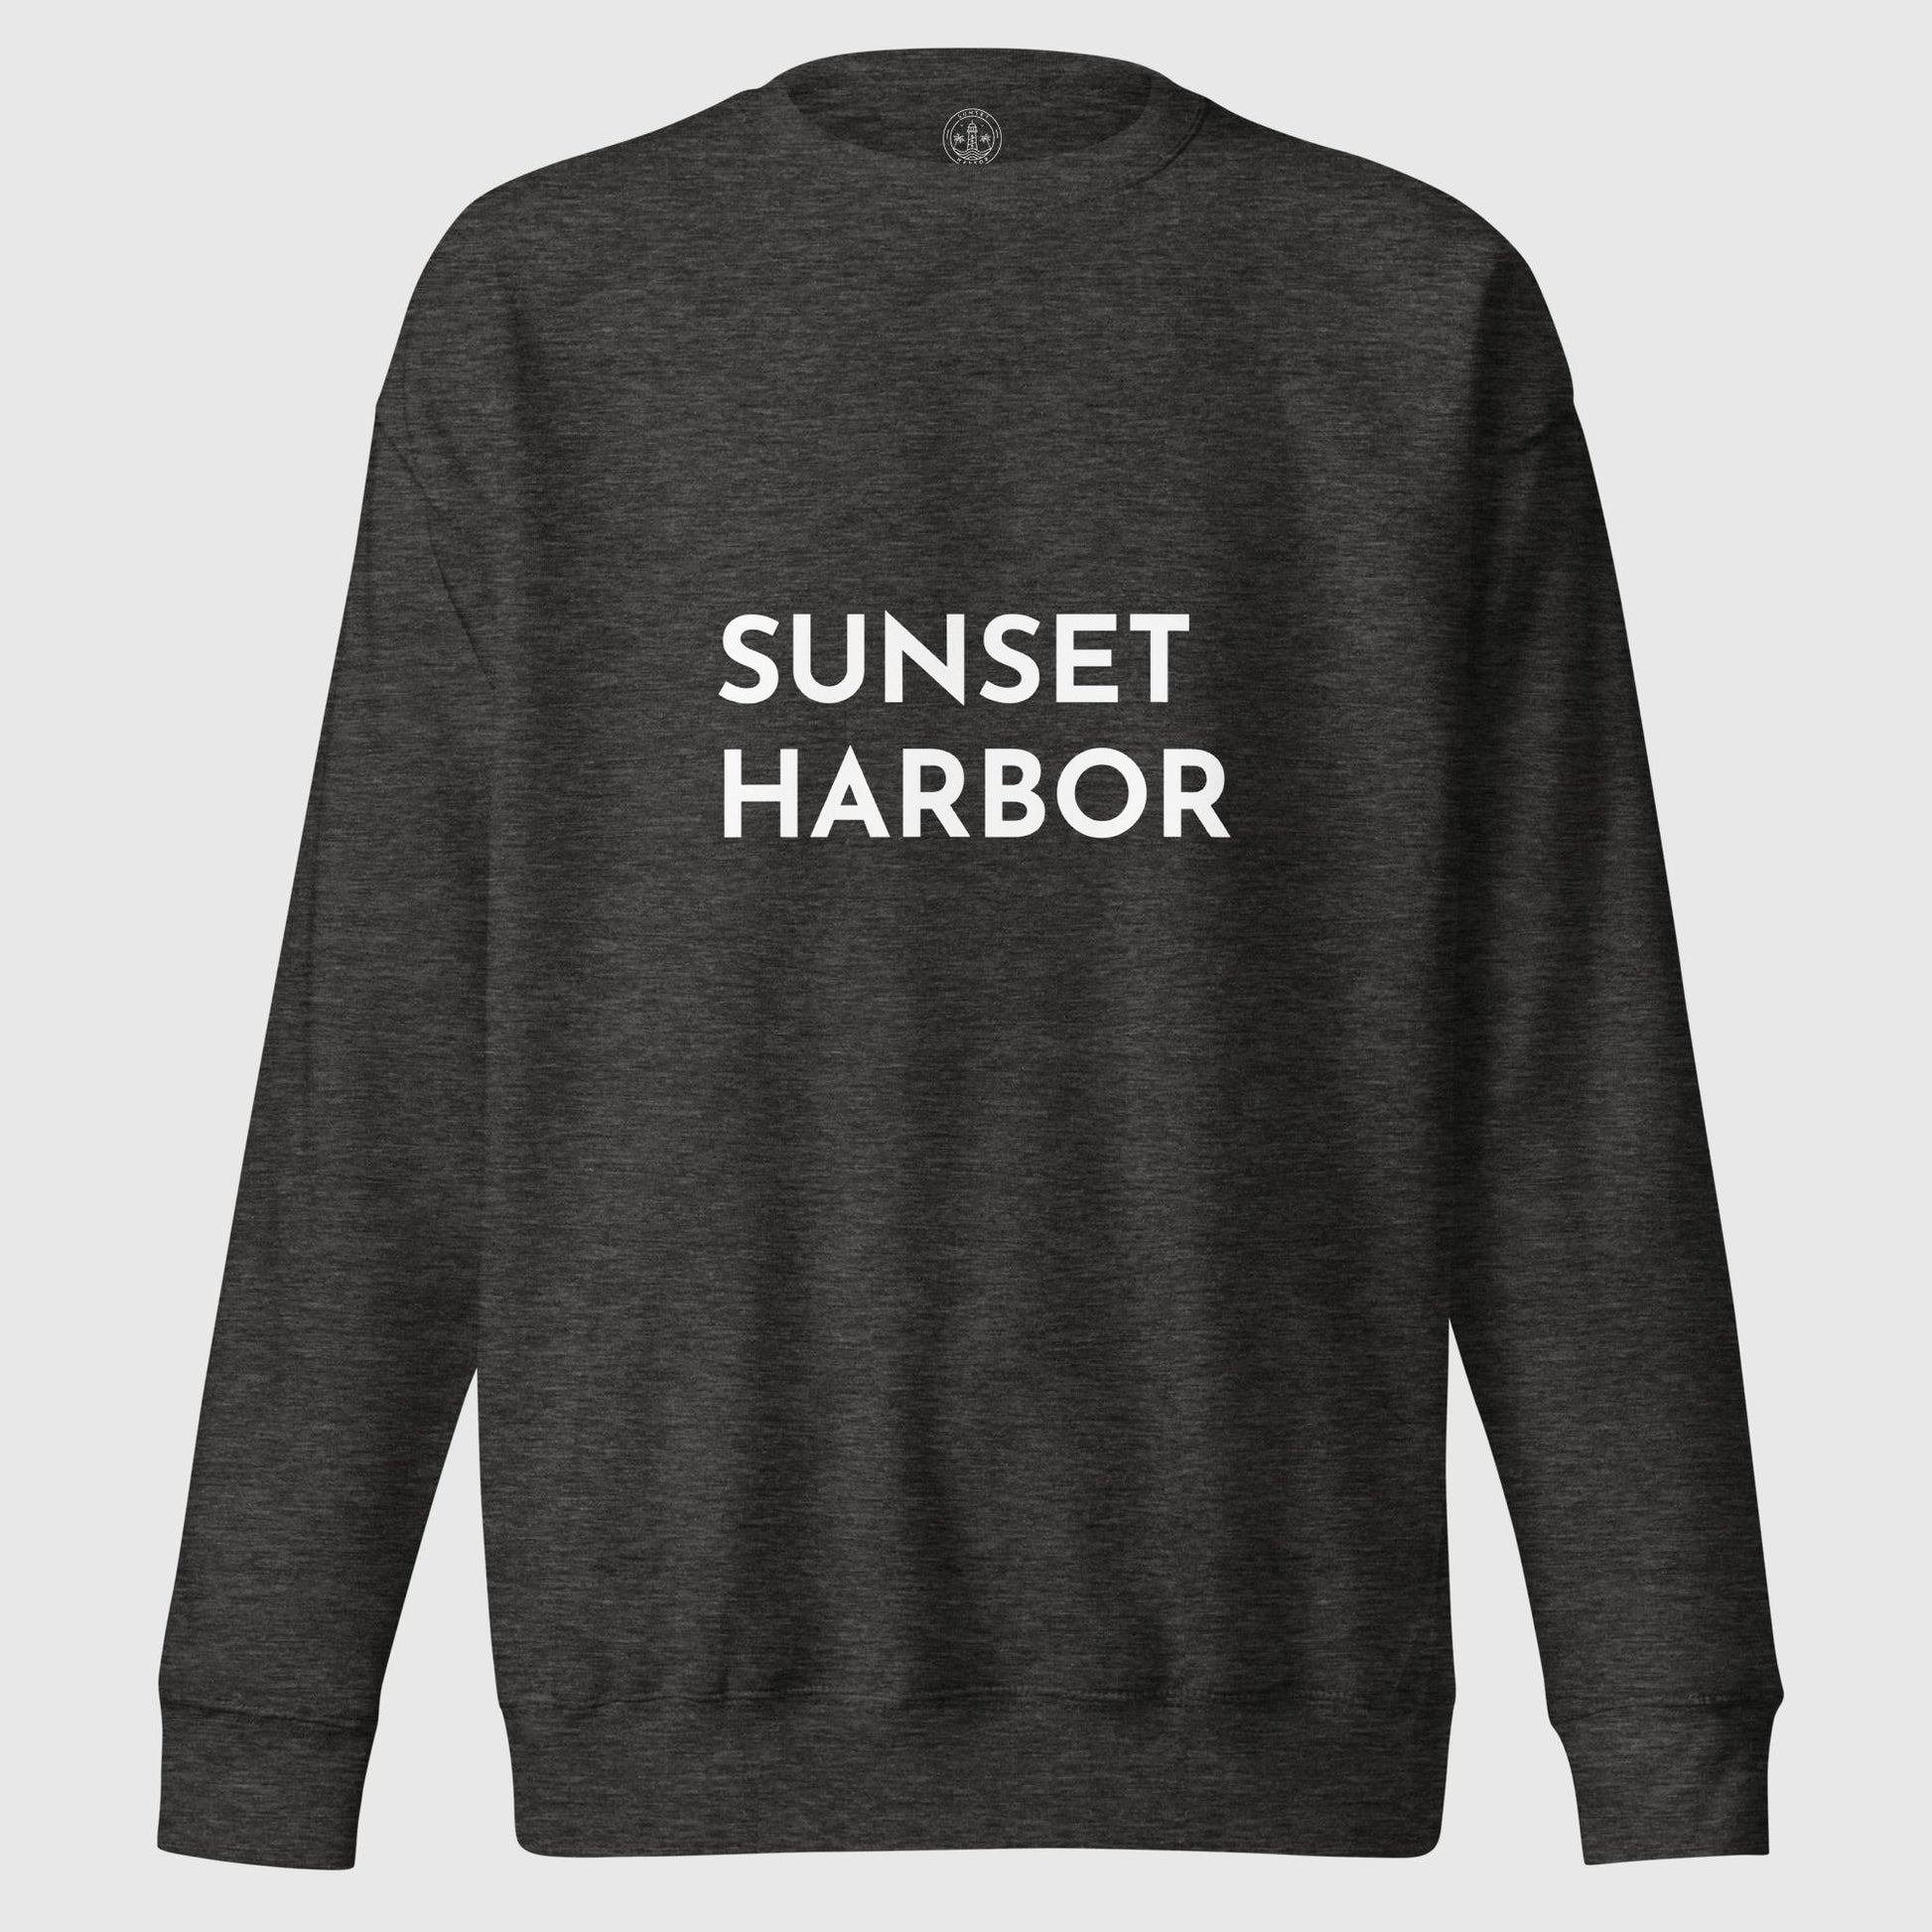 Unisex Premium Sweatshirt - Sunset Harbor - Sunset Harbor Clothing